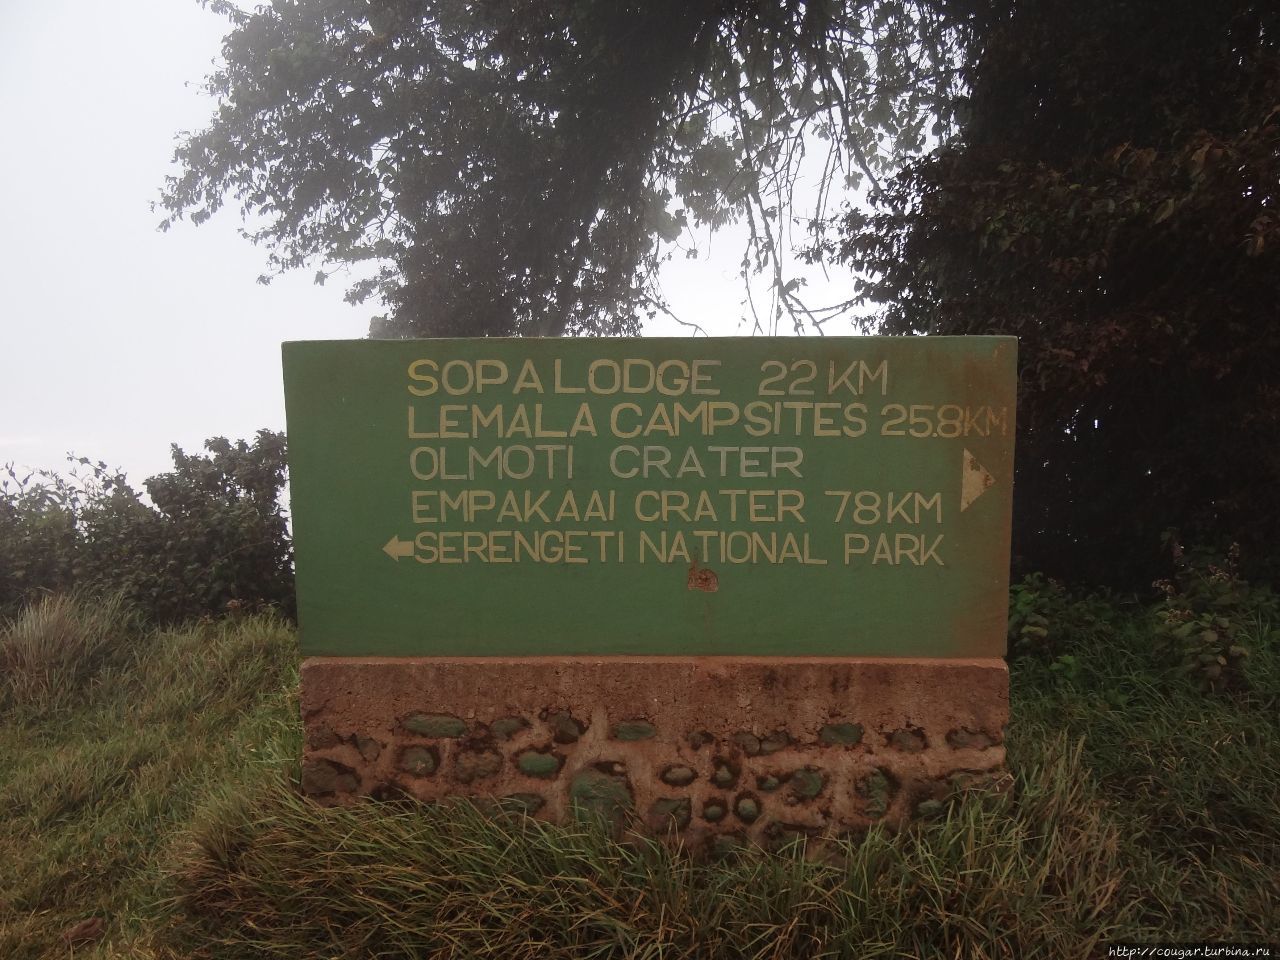 Указатель на склоне кратера Нгоронгоро. Нгоронгоро (заповедник в кратере вулкана), Танзания